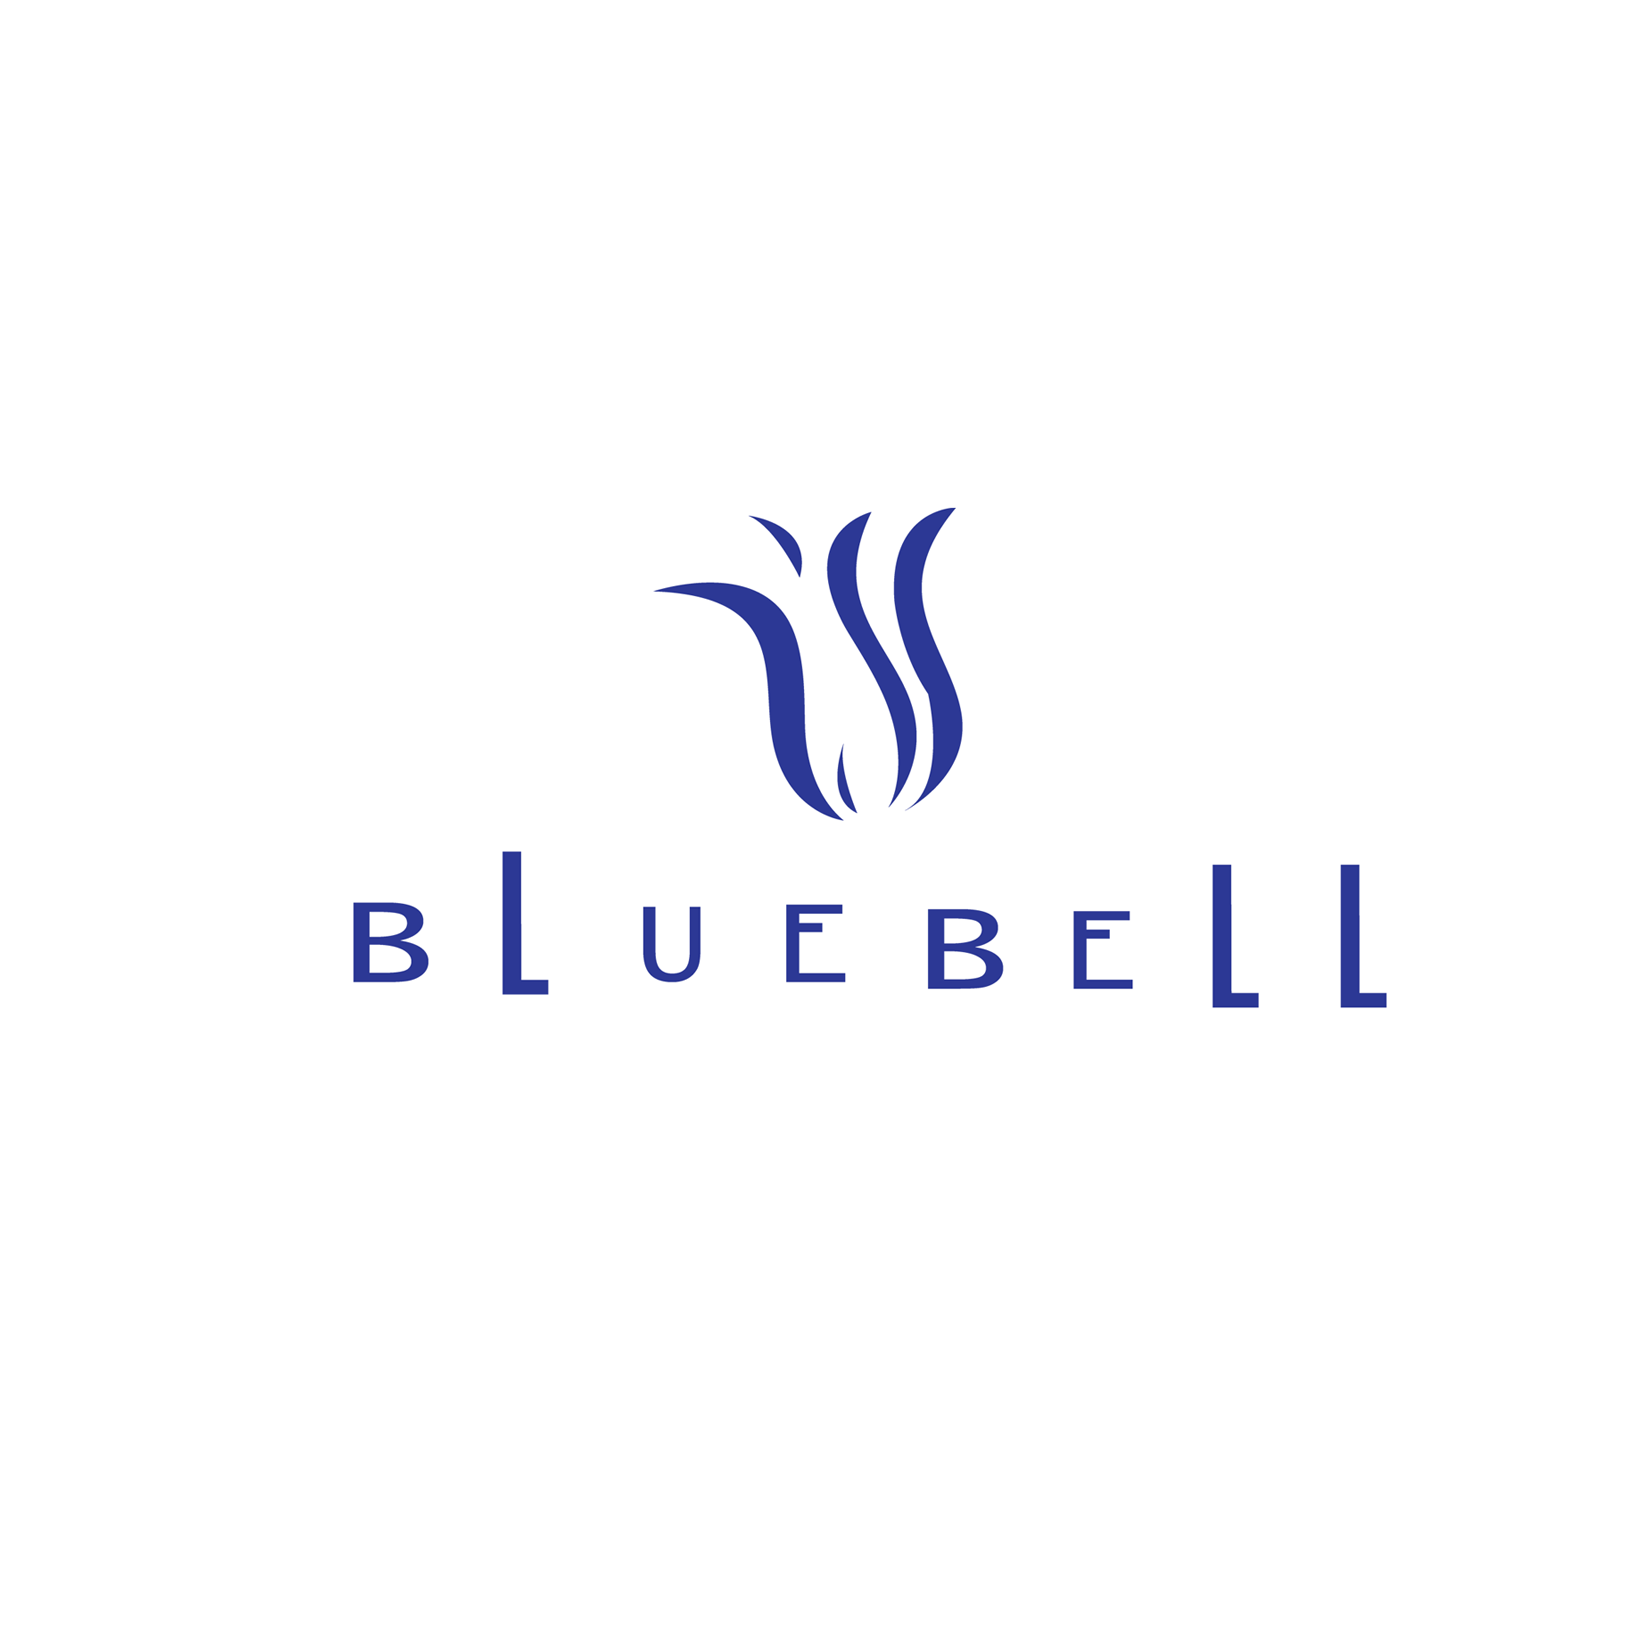 BLUE BELL logo